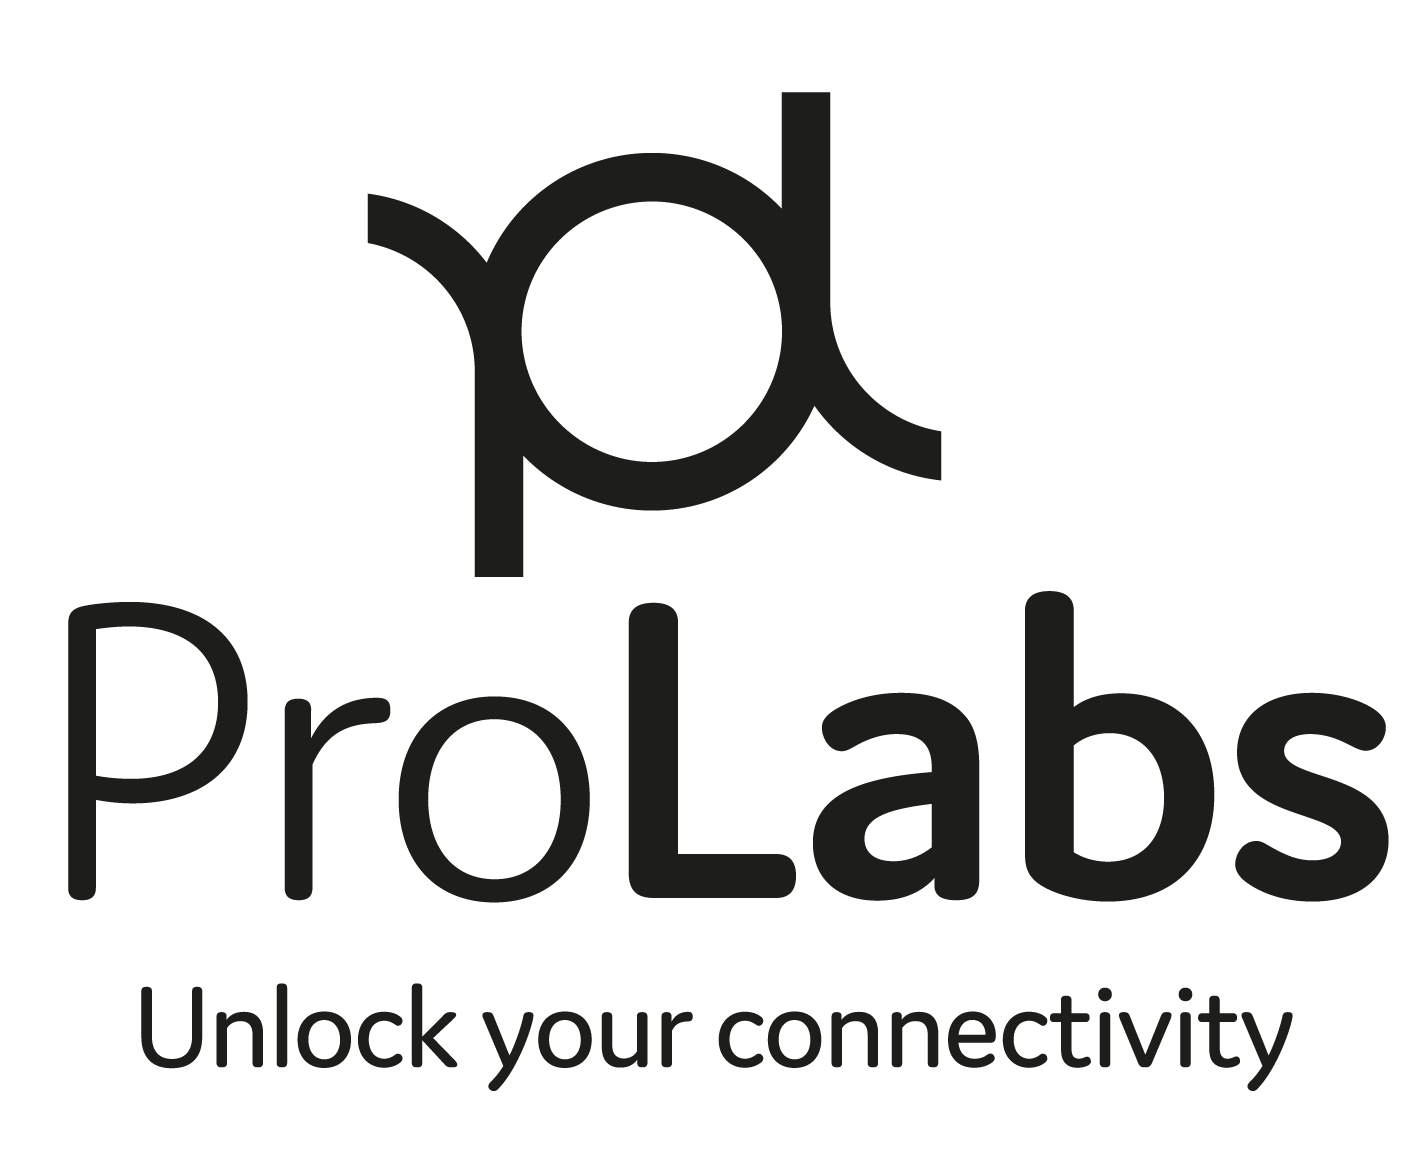 ProLabs Stacked Logo Black.png